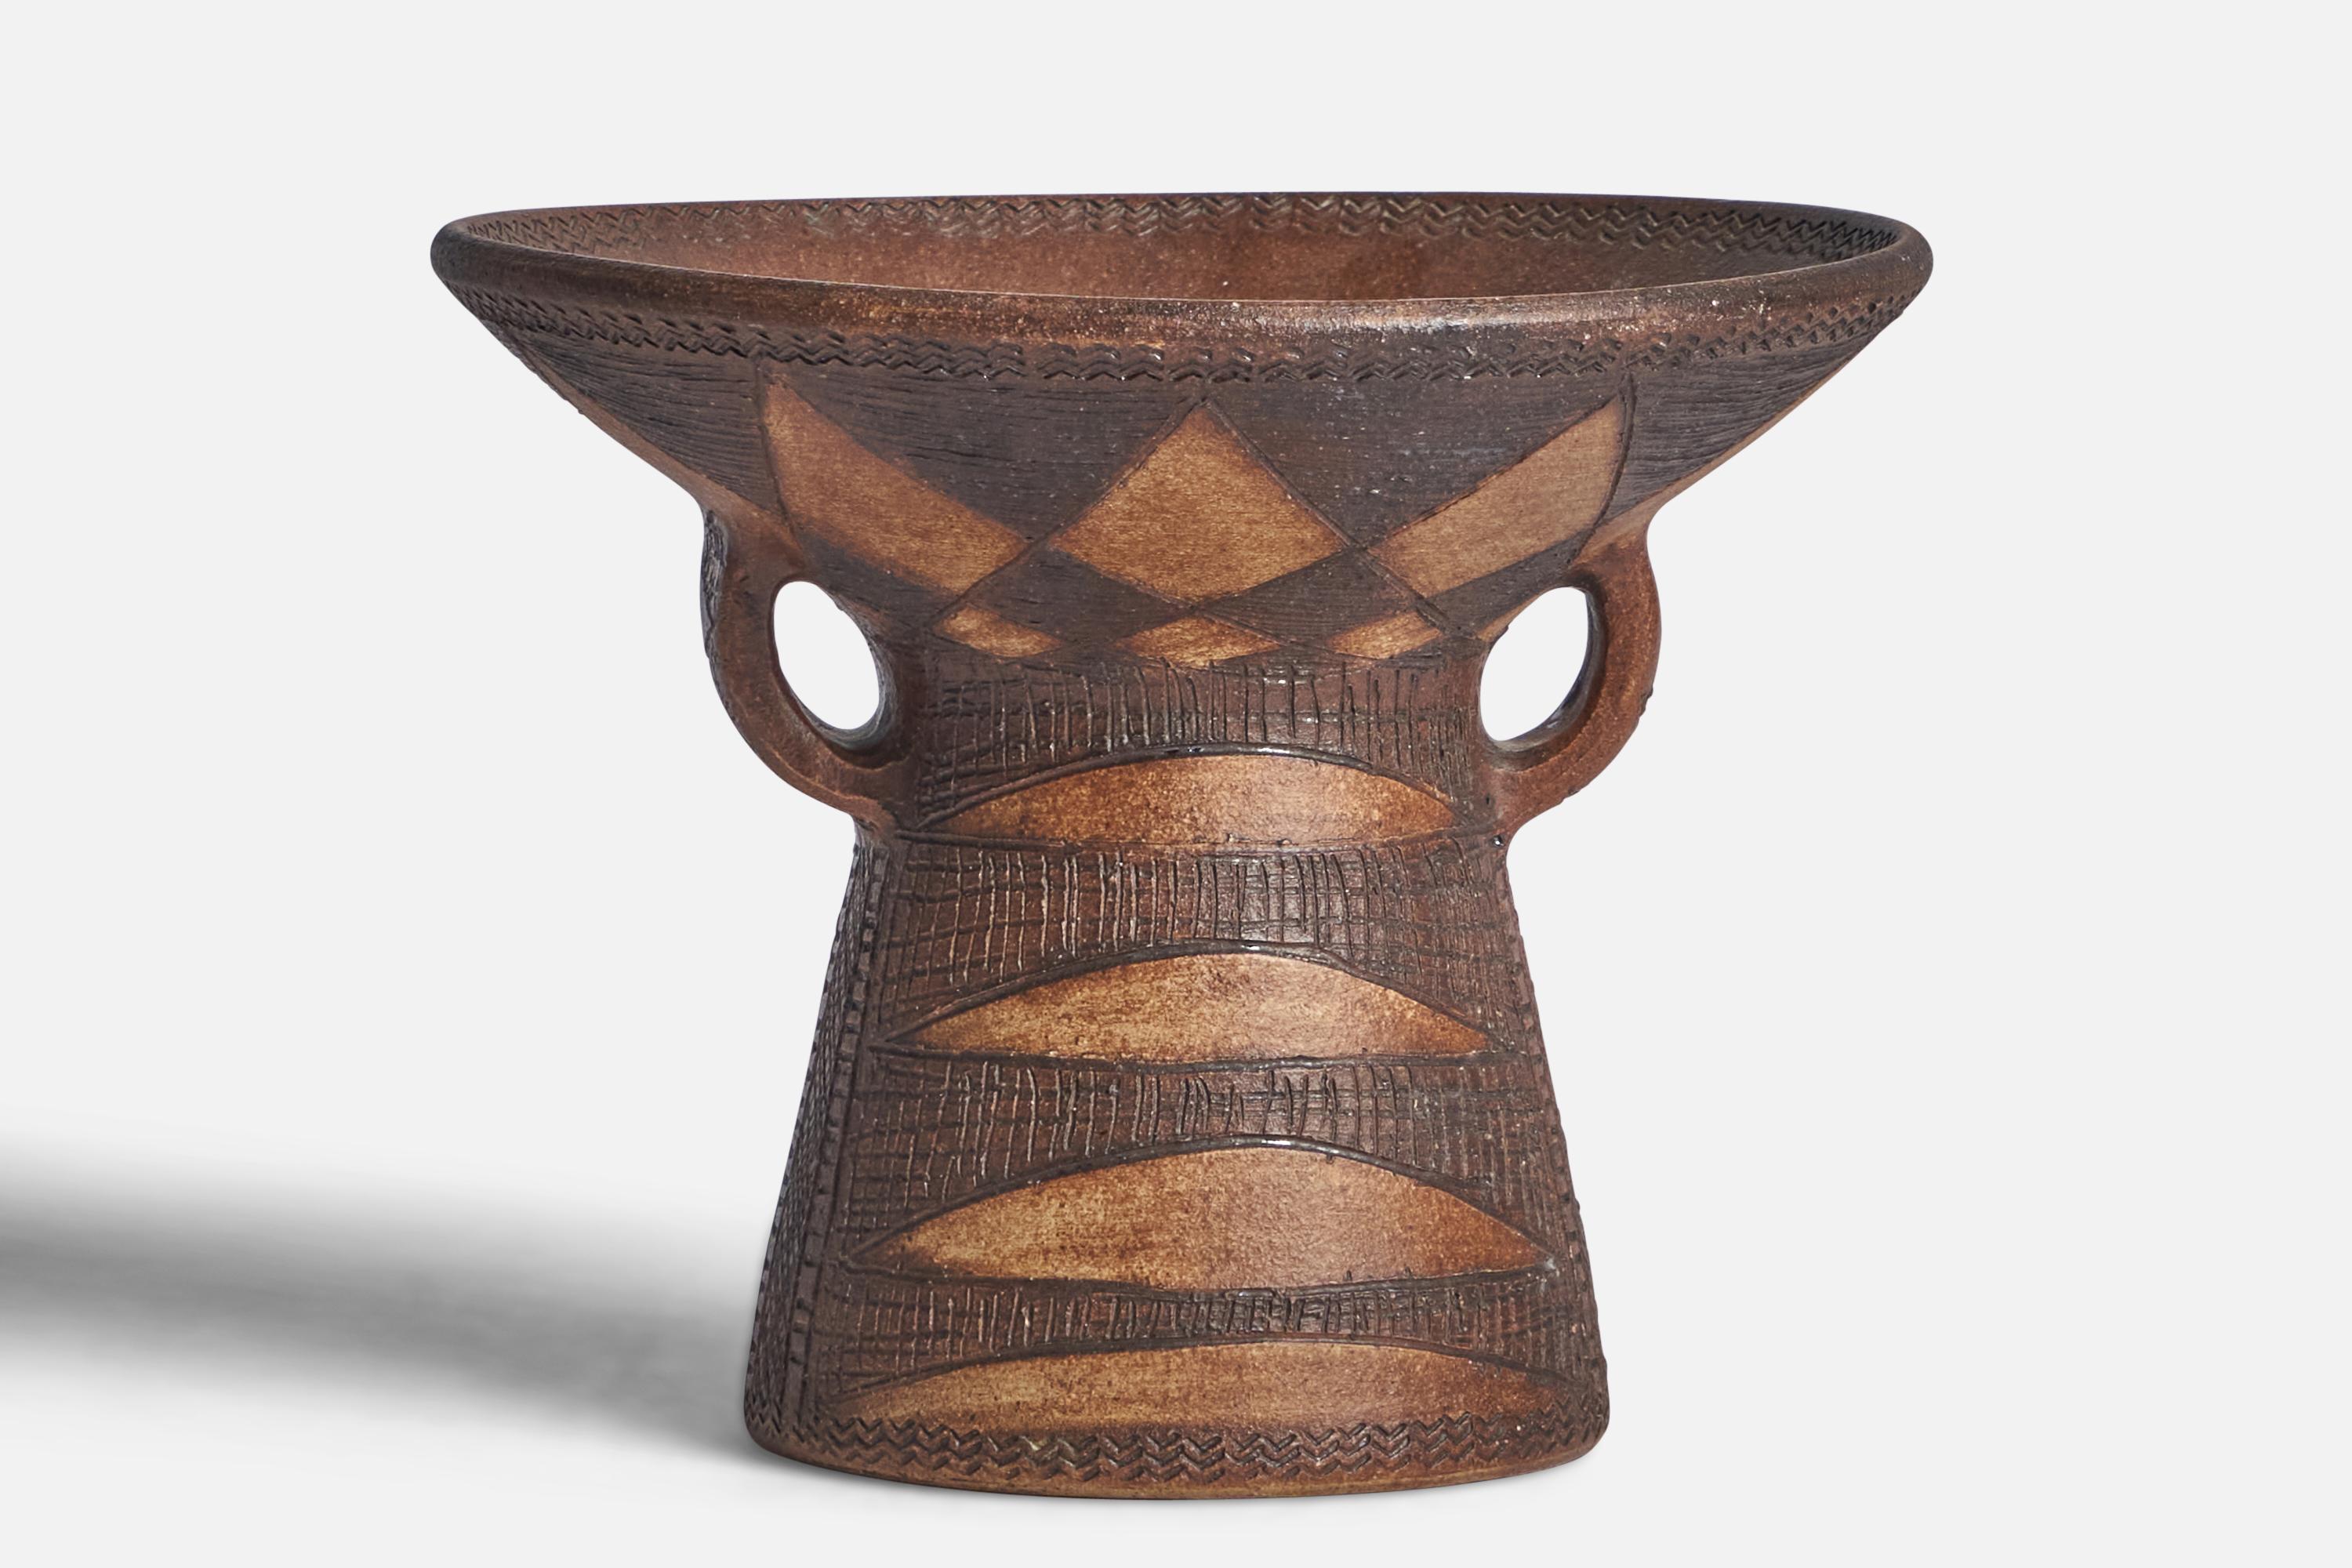 A brown-glazed stoneware vase designed by Nils Allan Johannesson and produced by Barsebäckshamn, Sweden, 1970s.